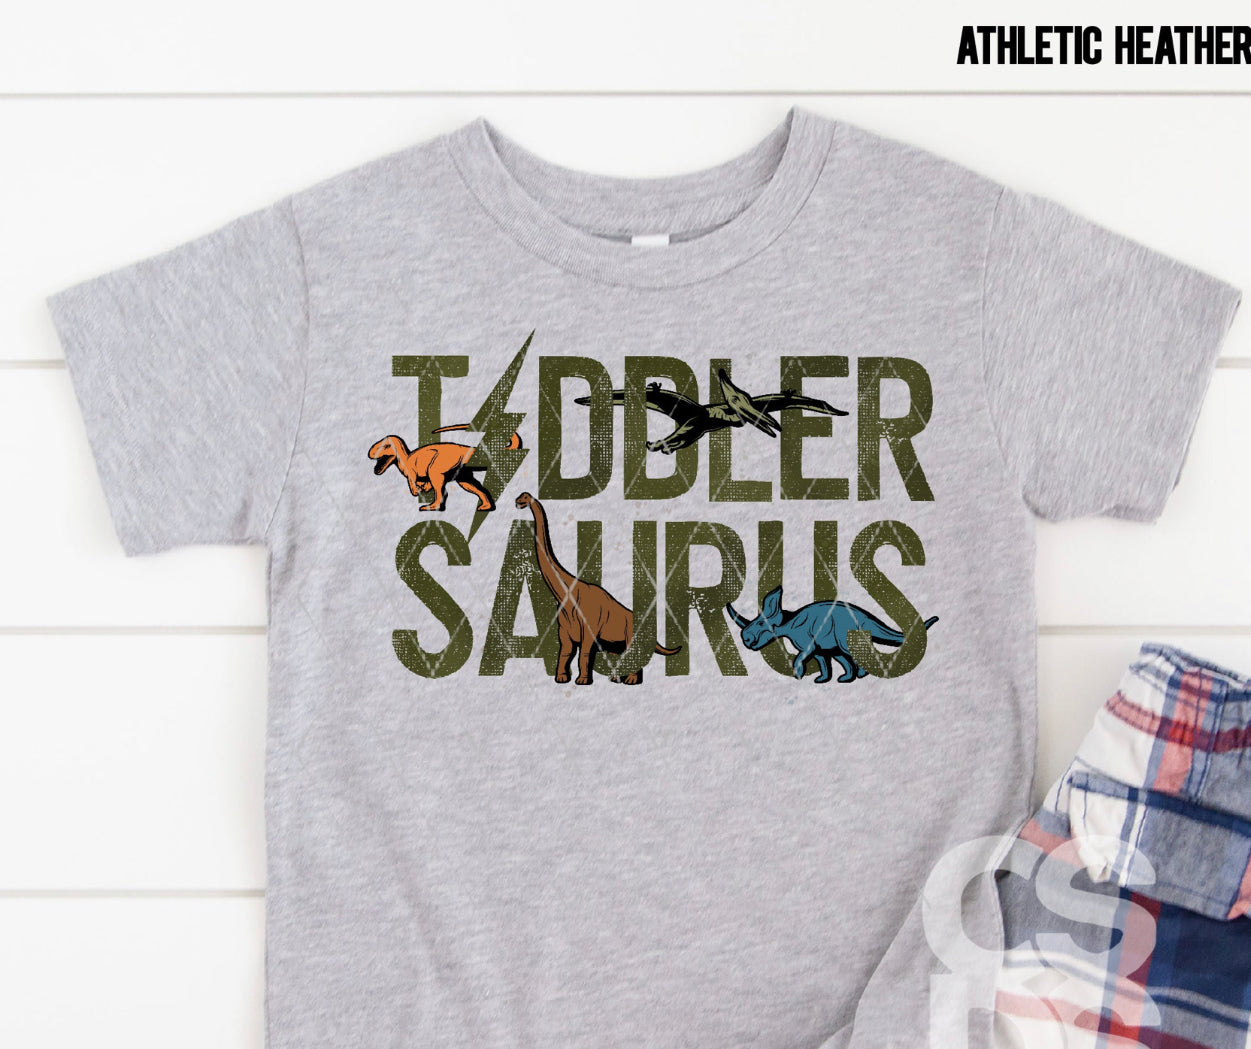 Toddler Saurus - AnnRose Boutique